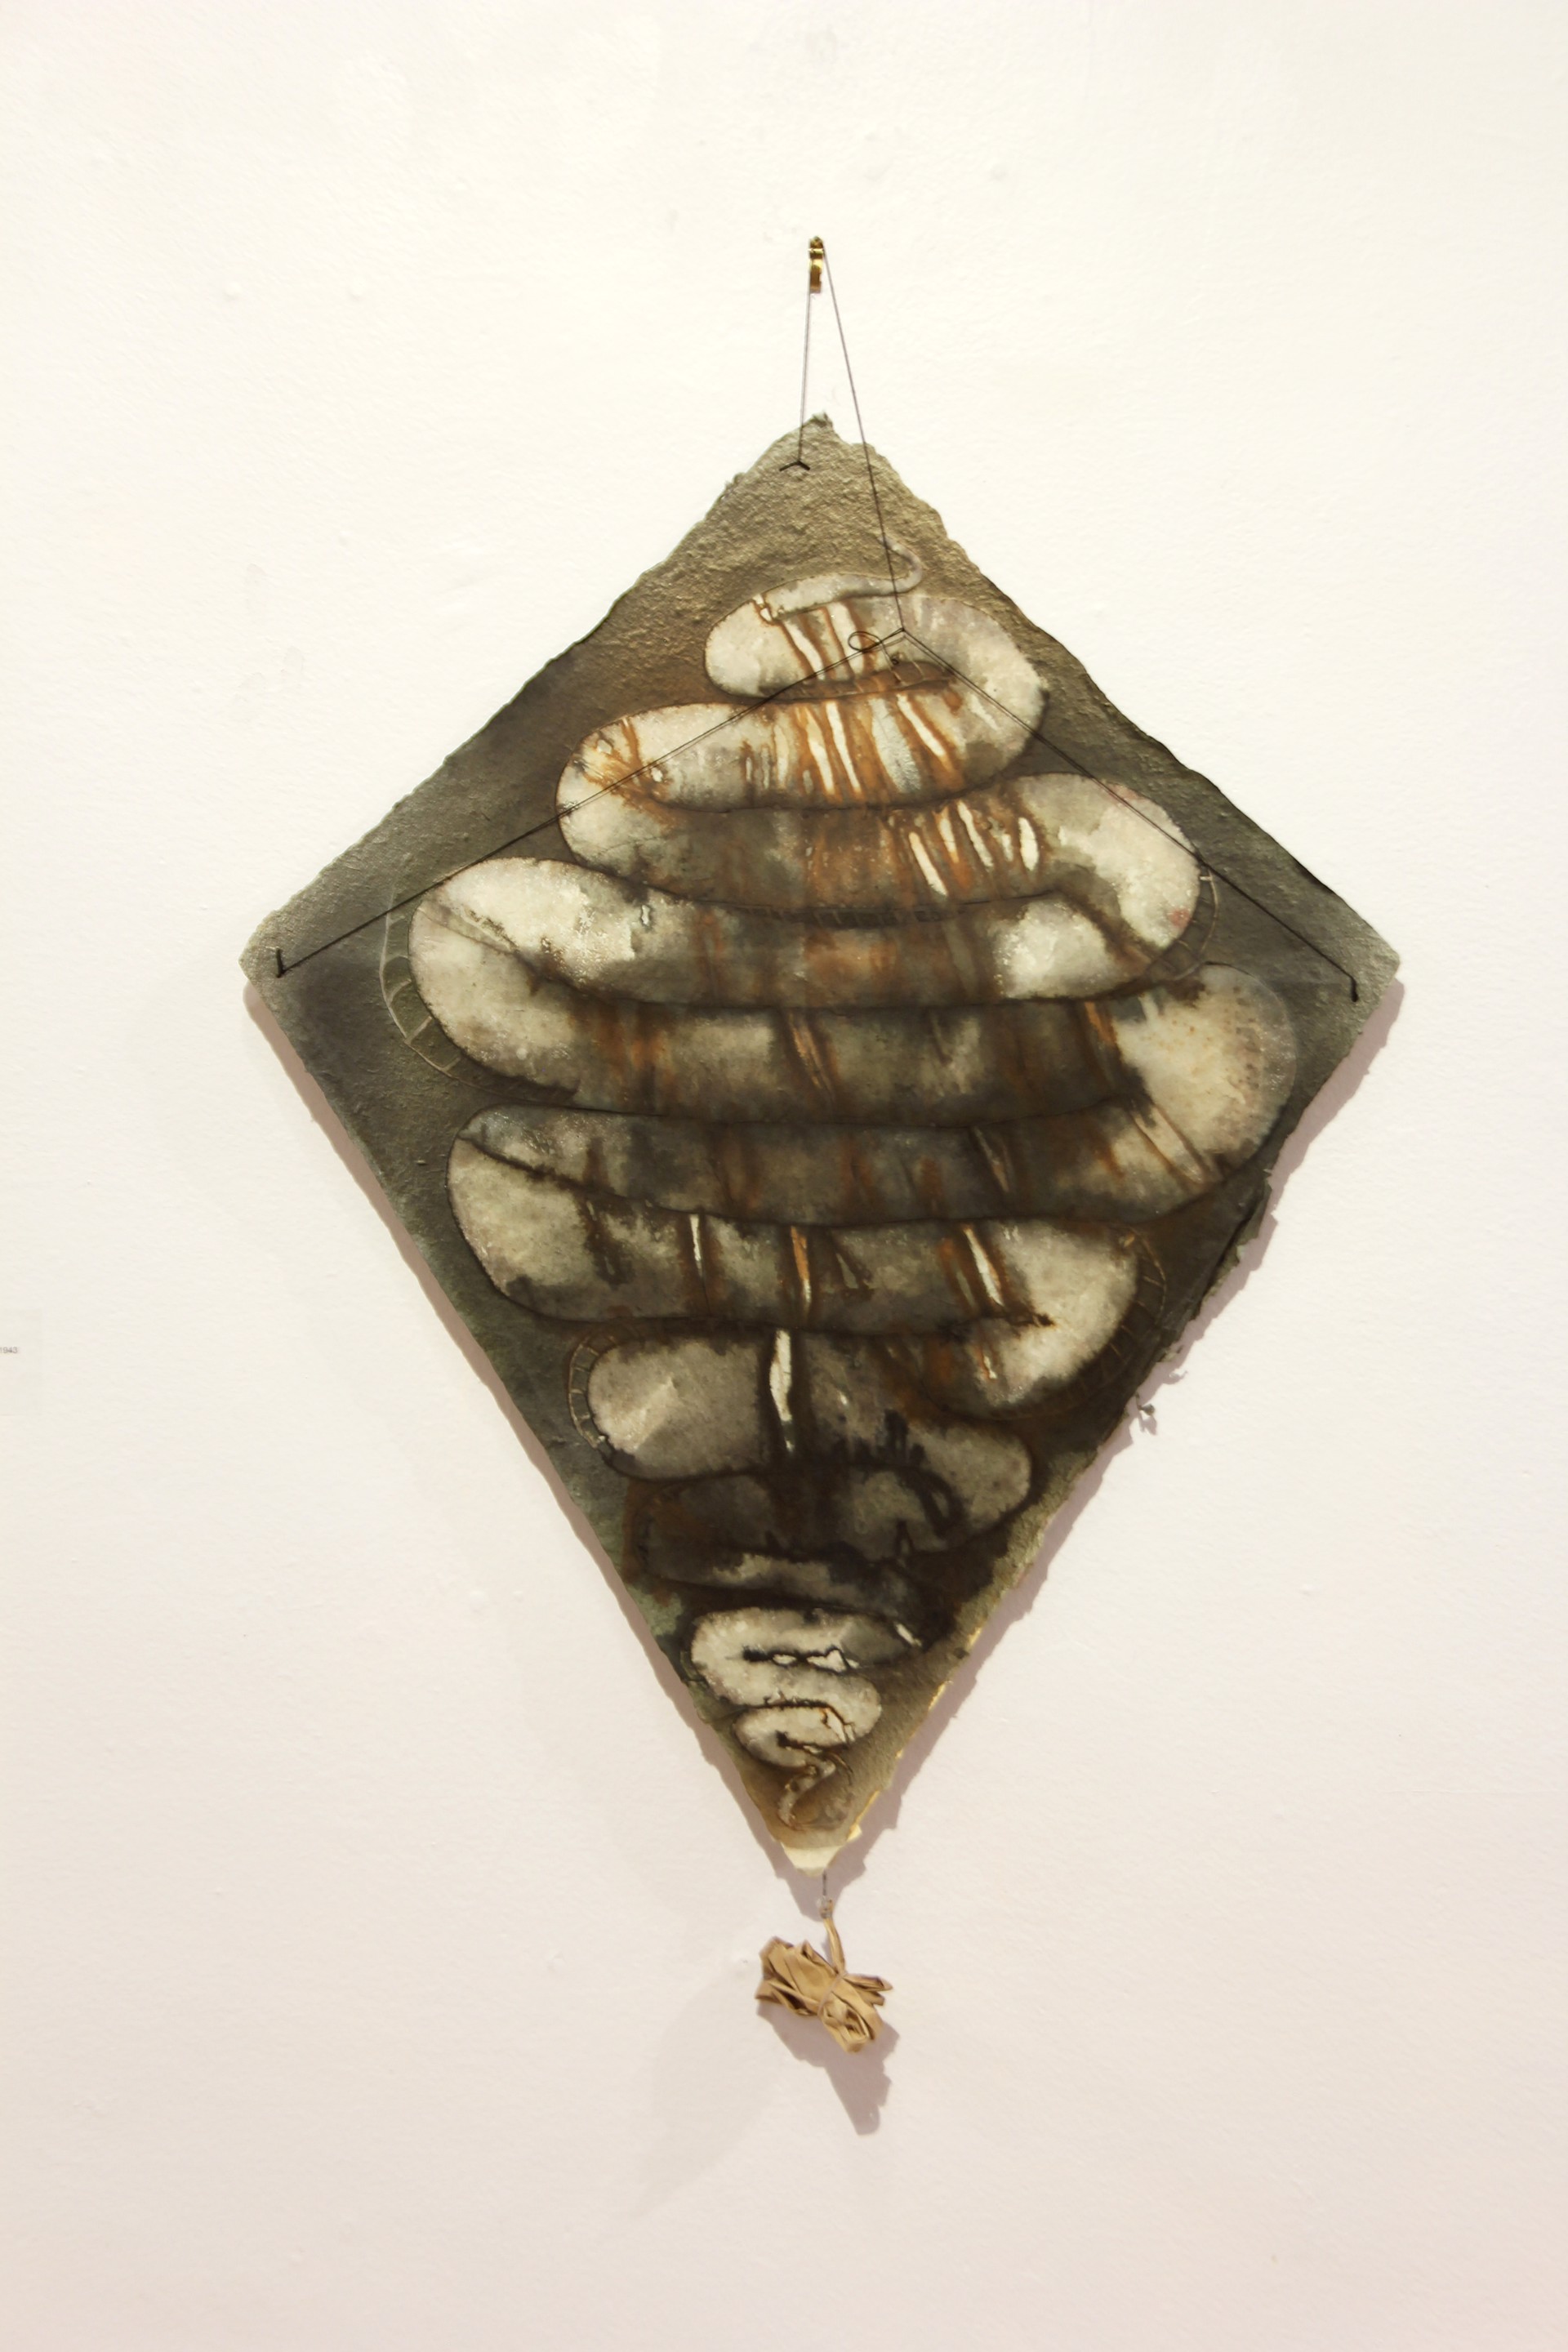 Serpiente Kite by Francisco Toledo (1940 - 2019)